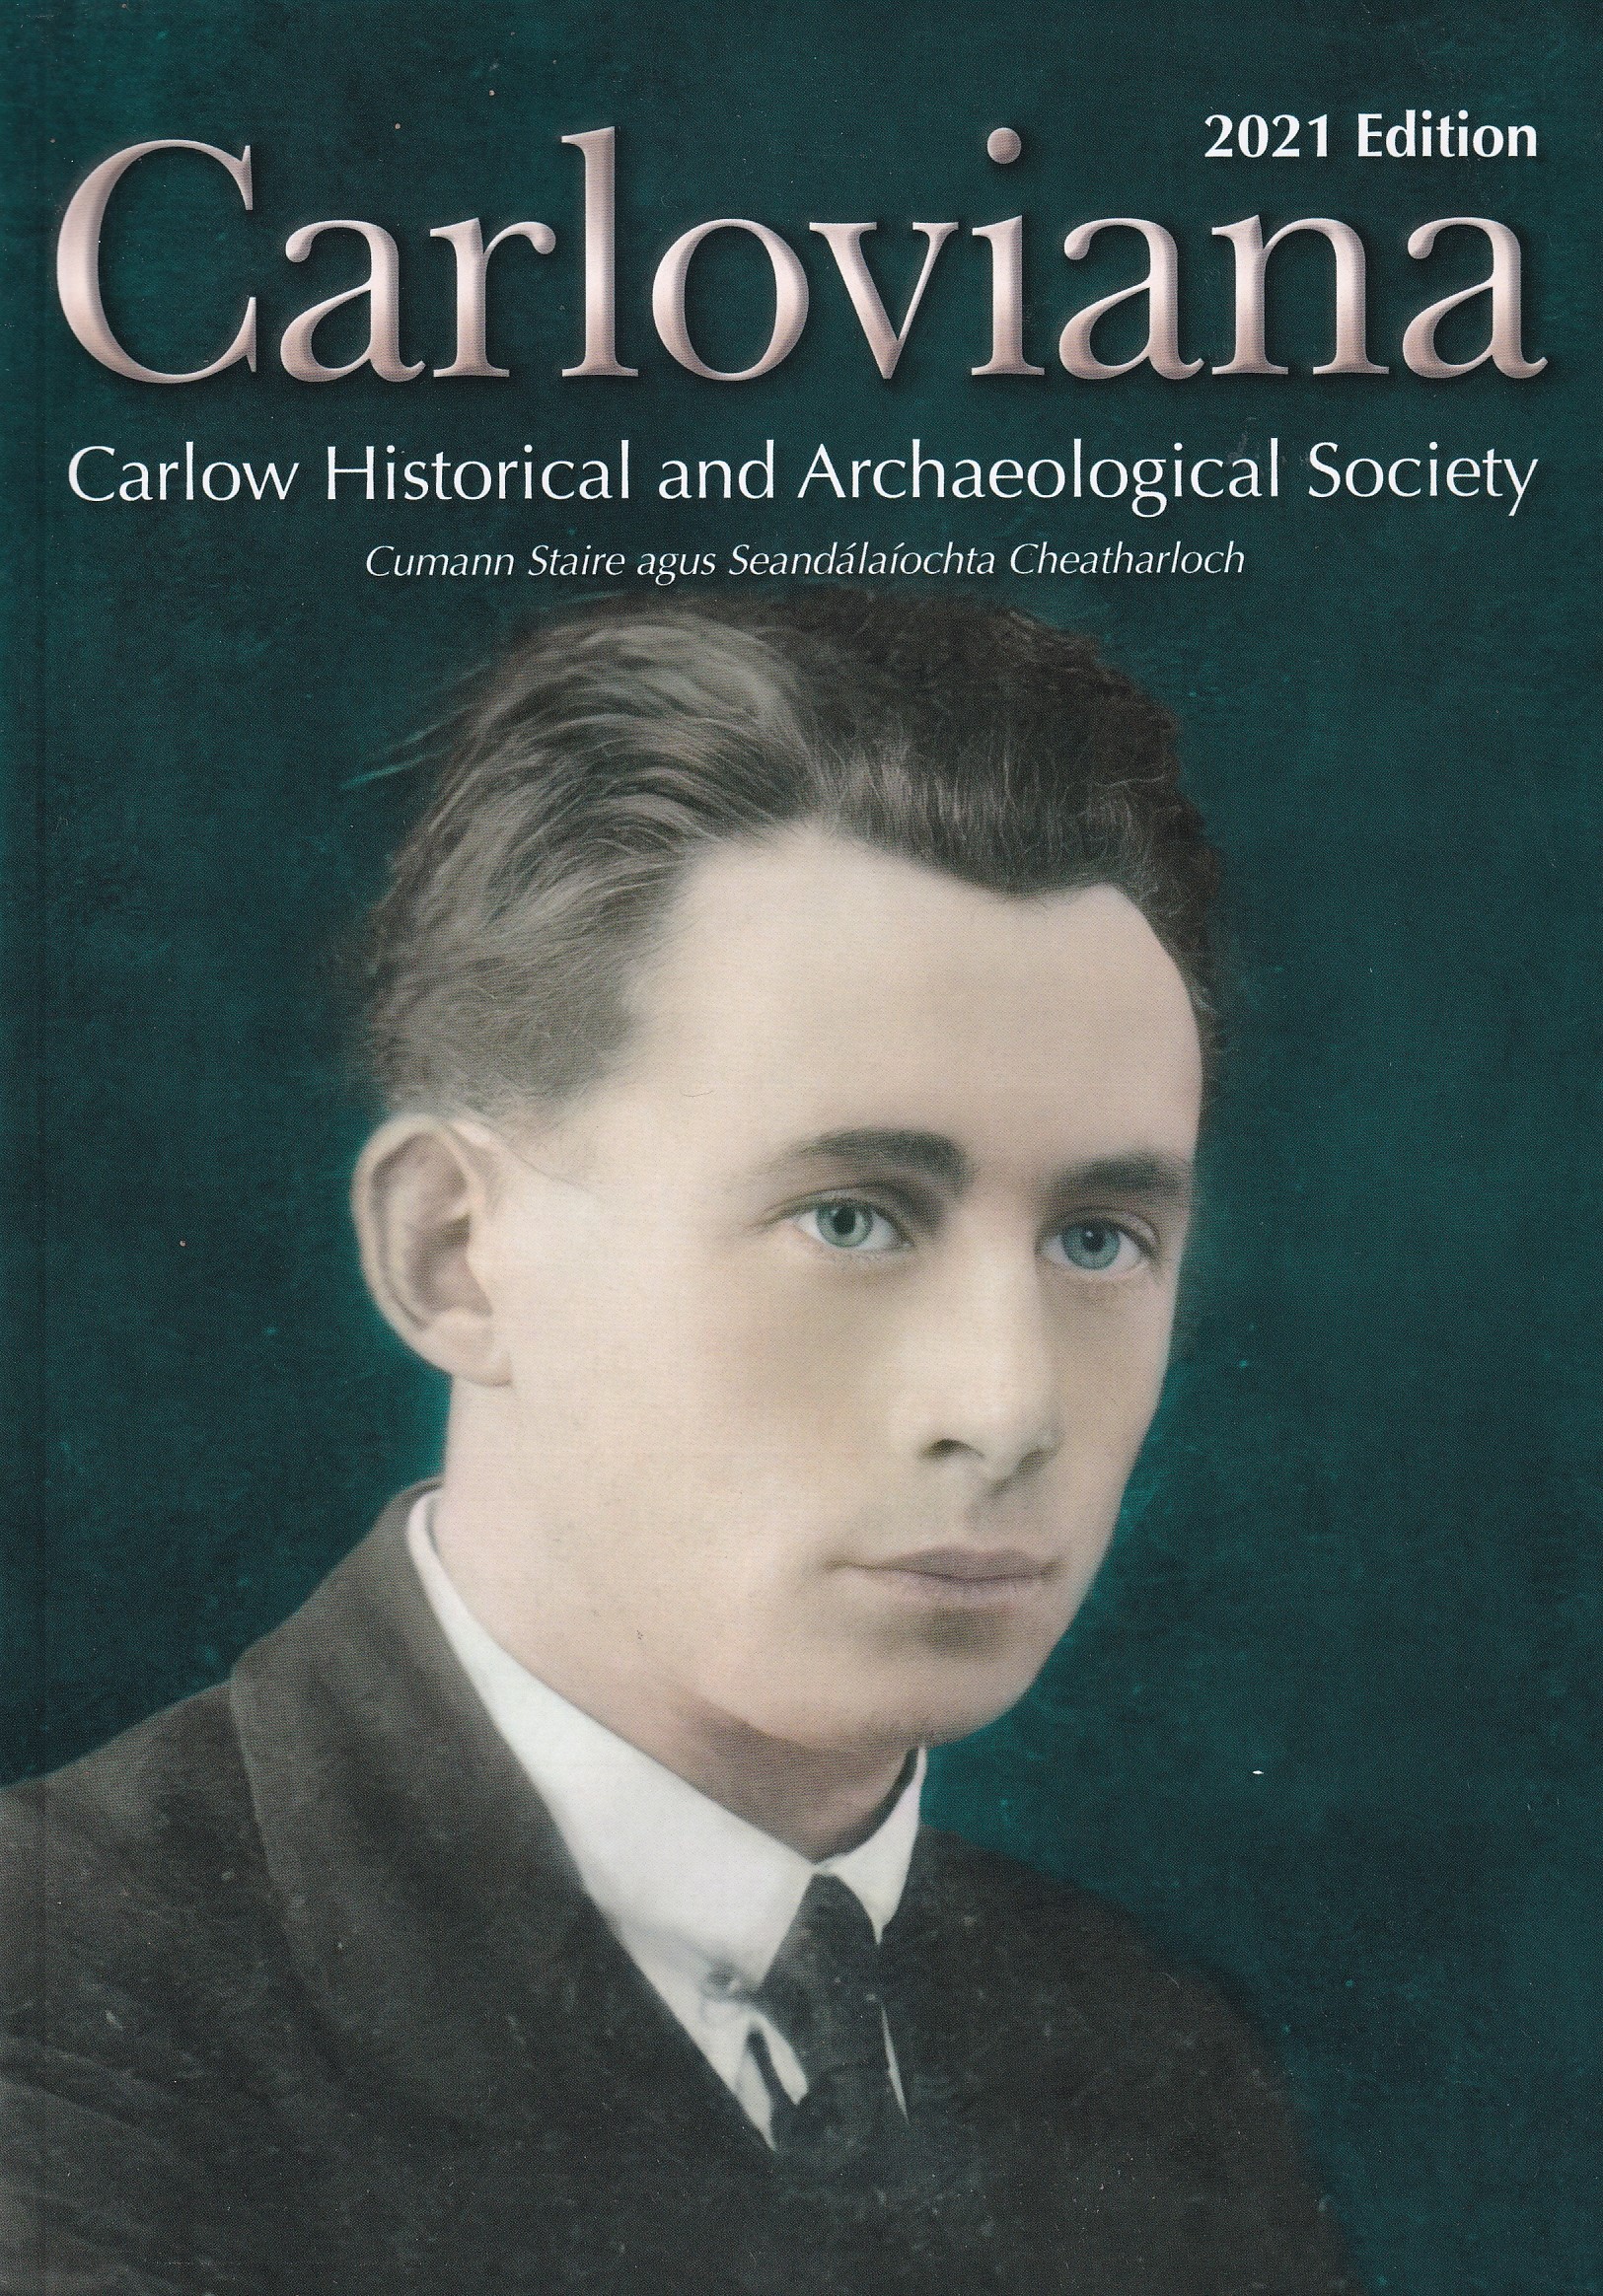 Carloviana by Carlow Historical and Archeological Society